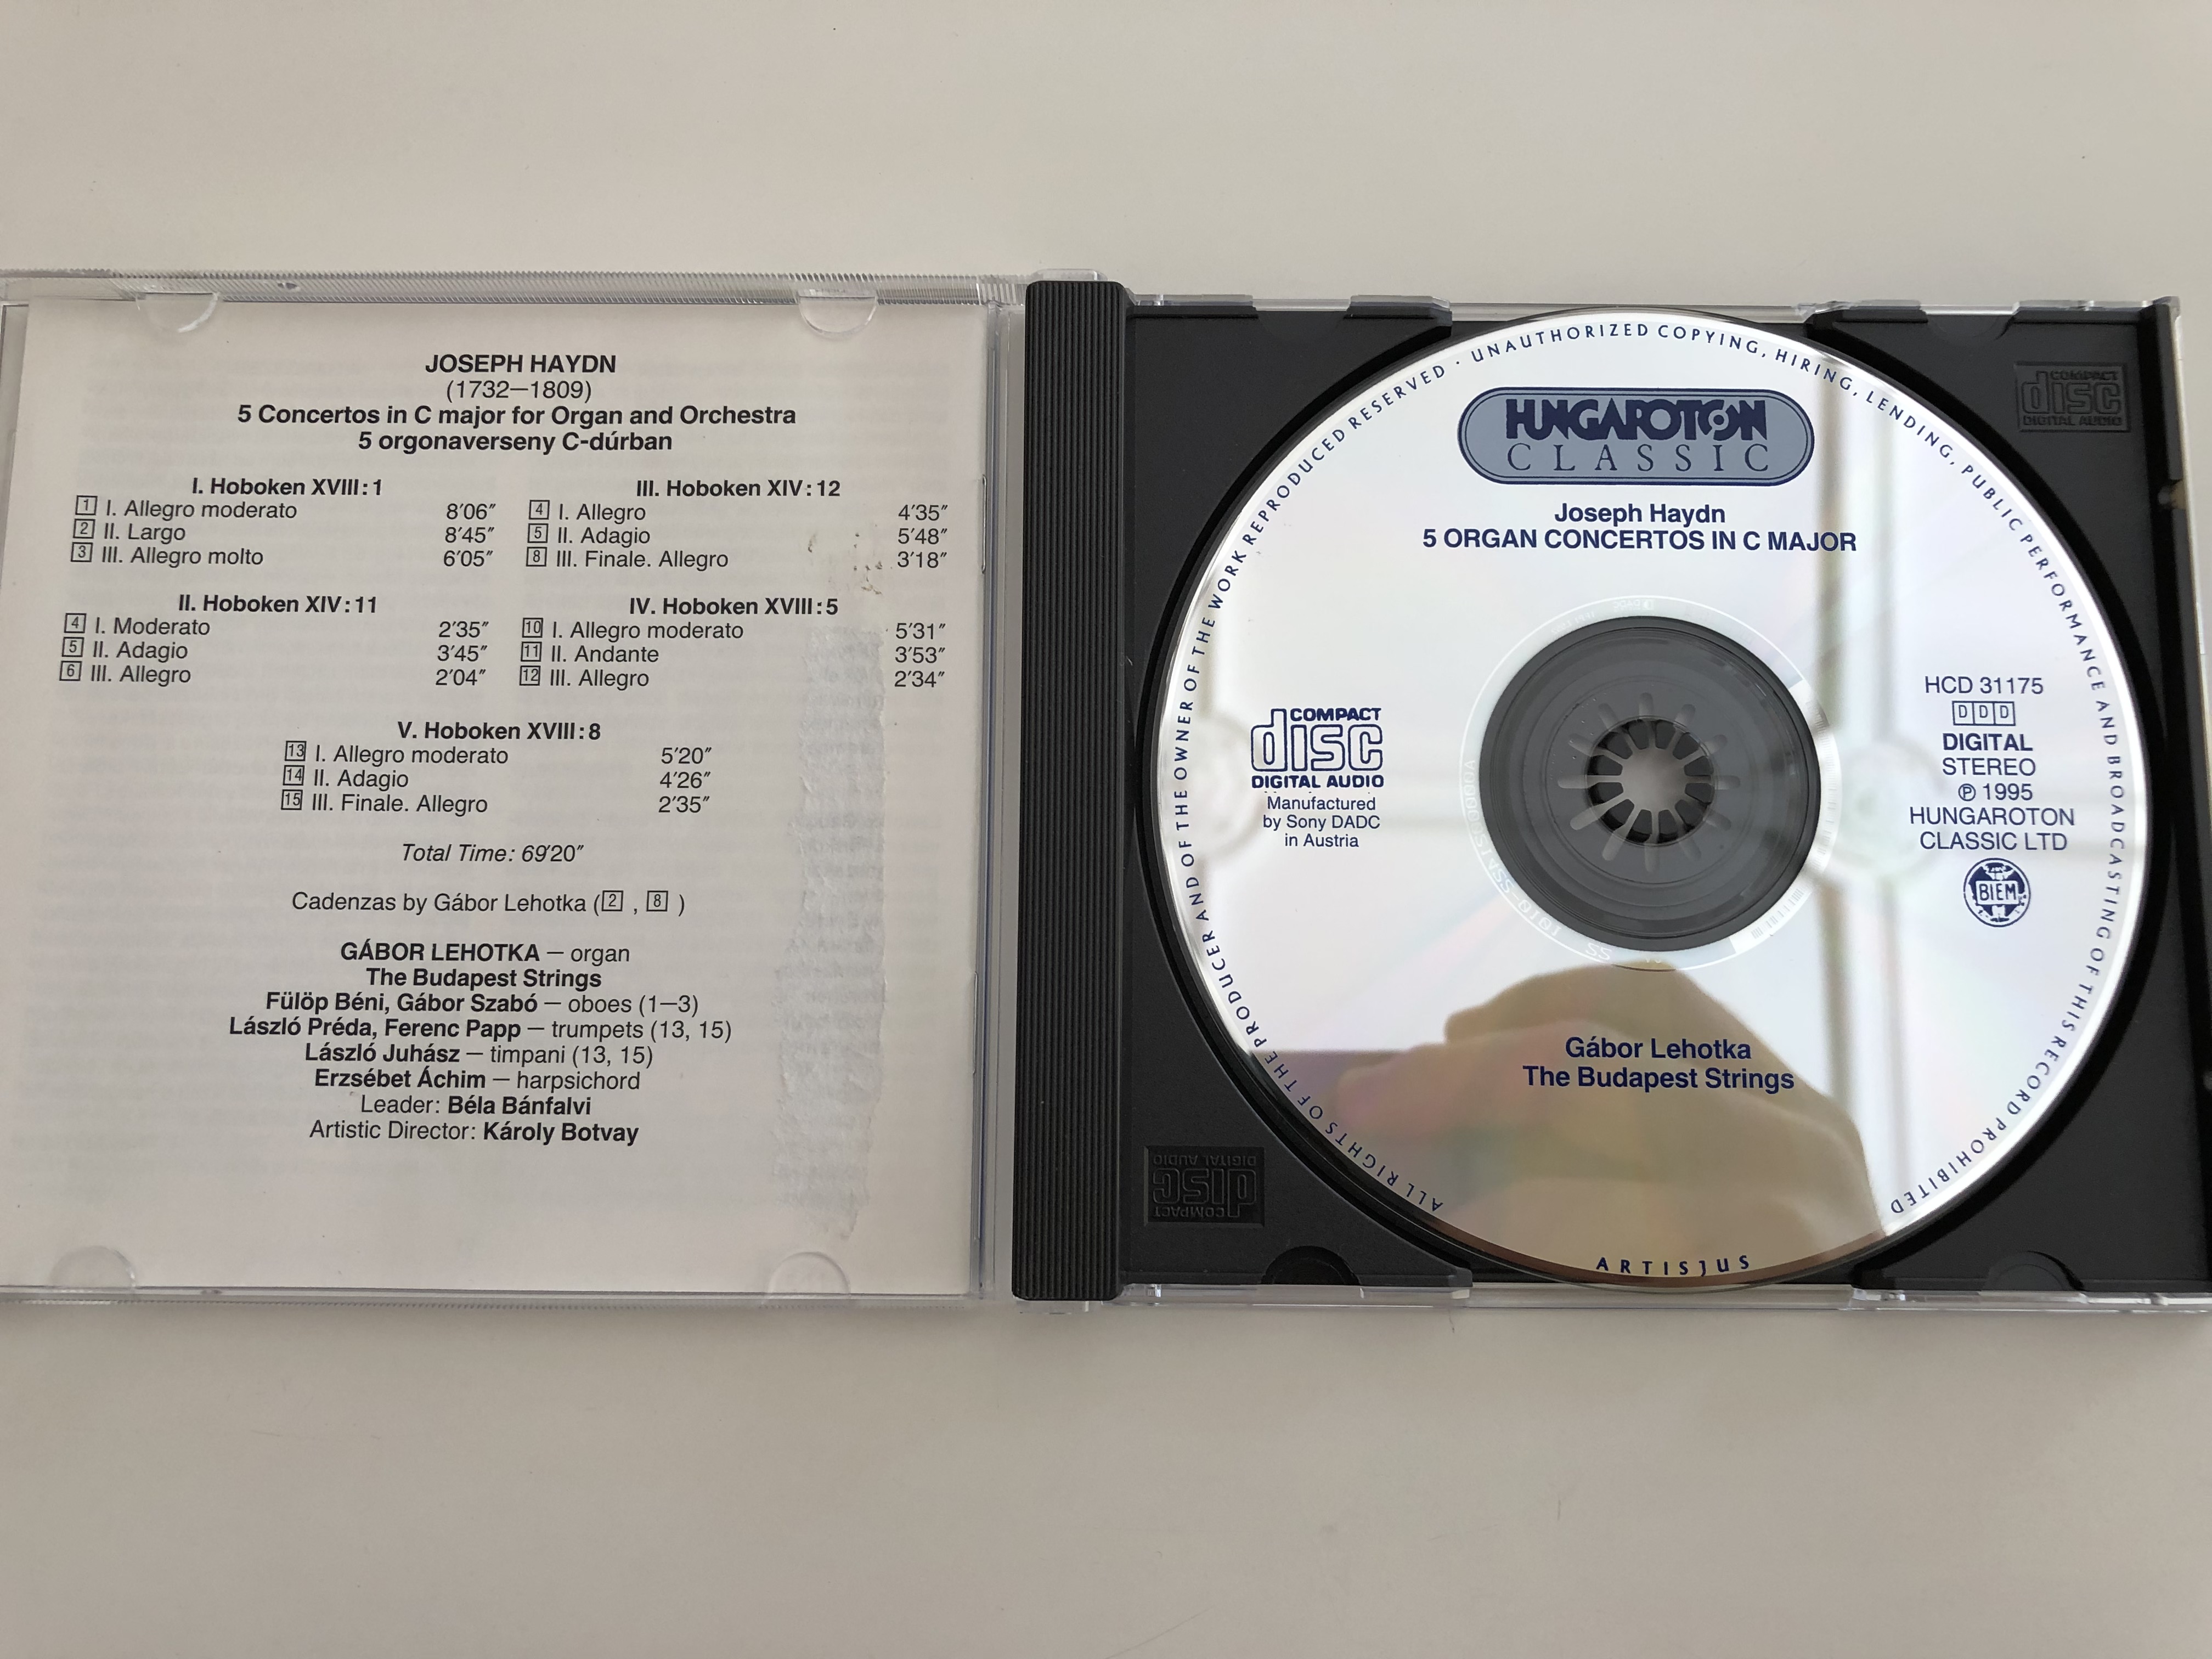 joseph-haydn-organ-concertos-g-bor-lehotka-the-budapest-strings-hungaroton-classic-audio-cd-1995-hcd-31175-5-.jpg